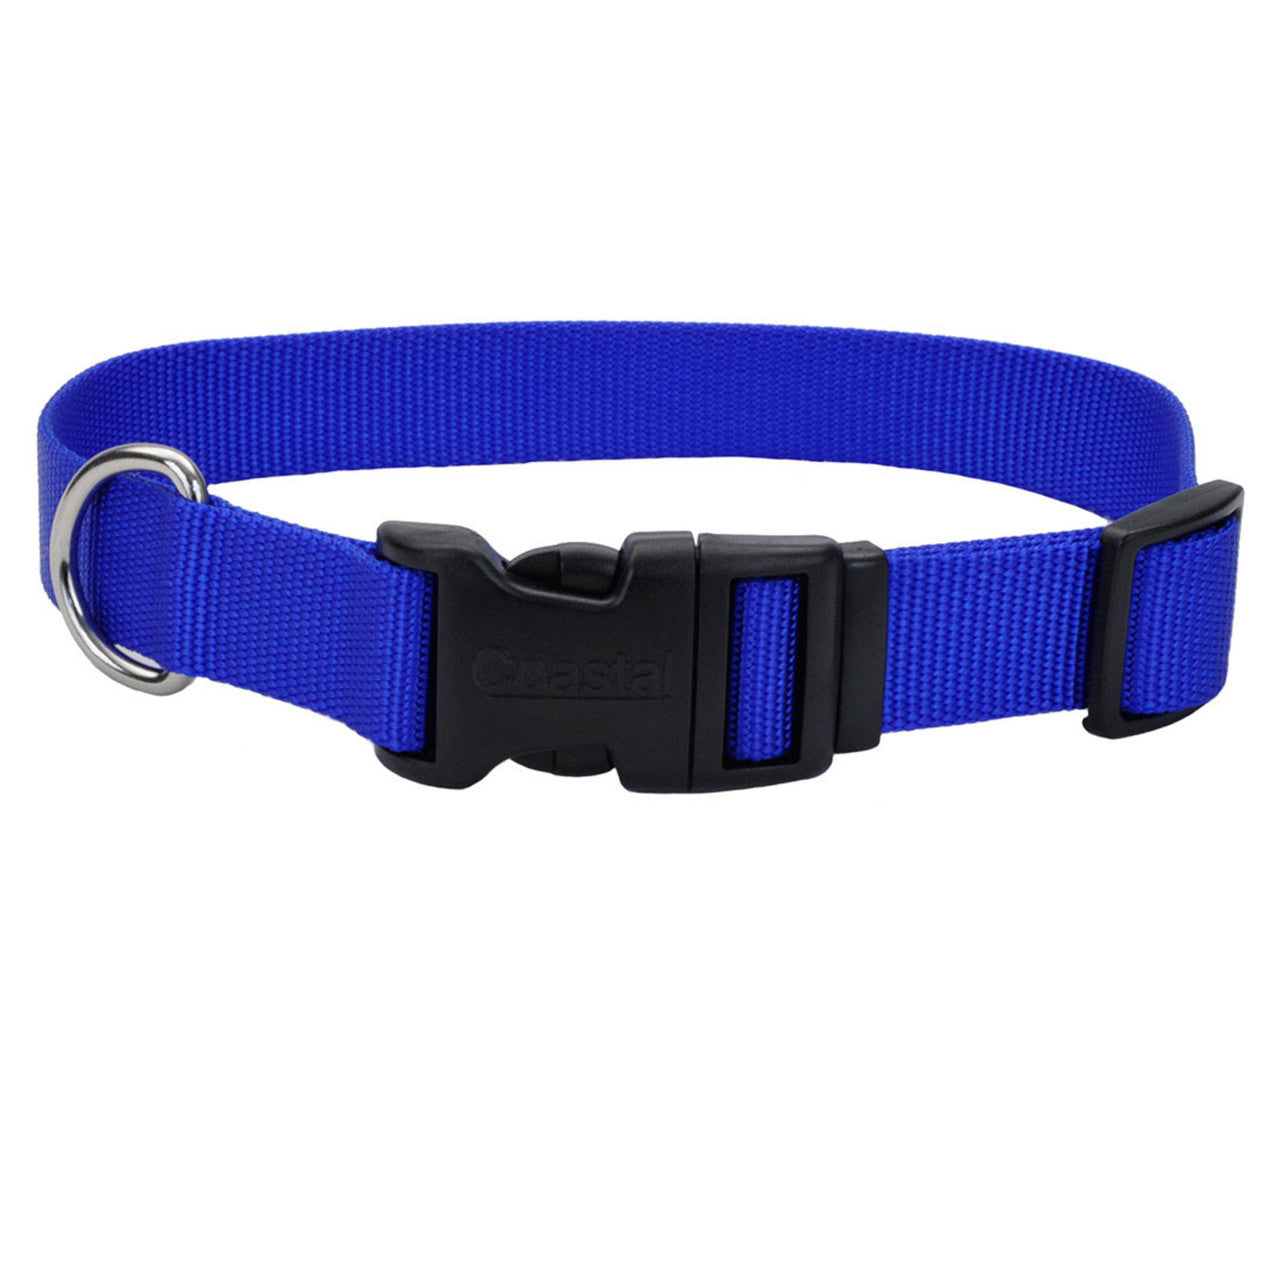 Coastal Adjustable Nylon Dog Collar with Plastic Buckle Blue 3/8 in x 8-12 in